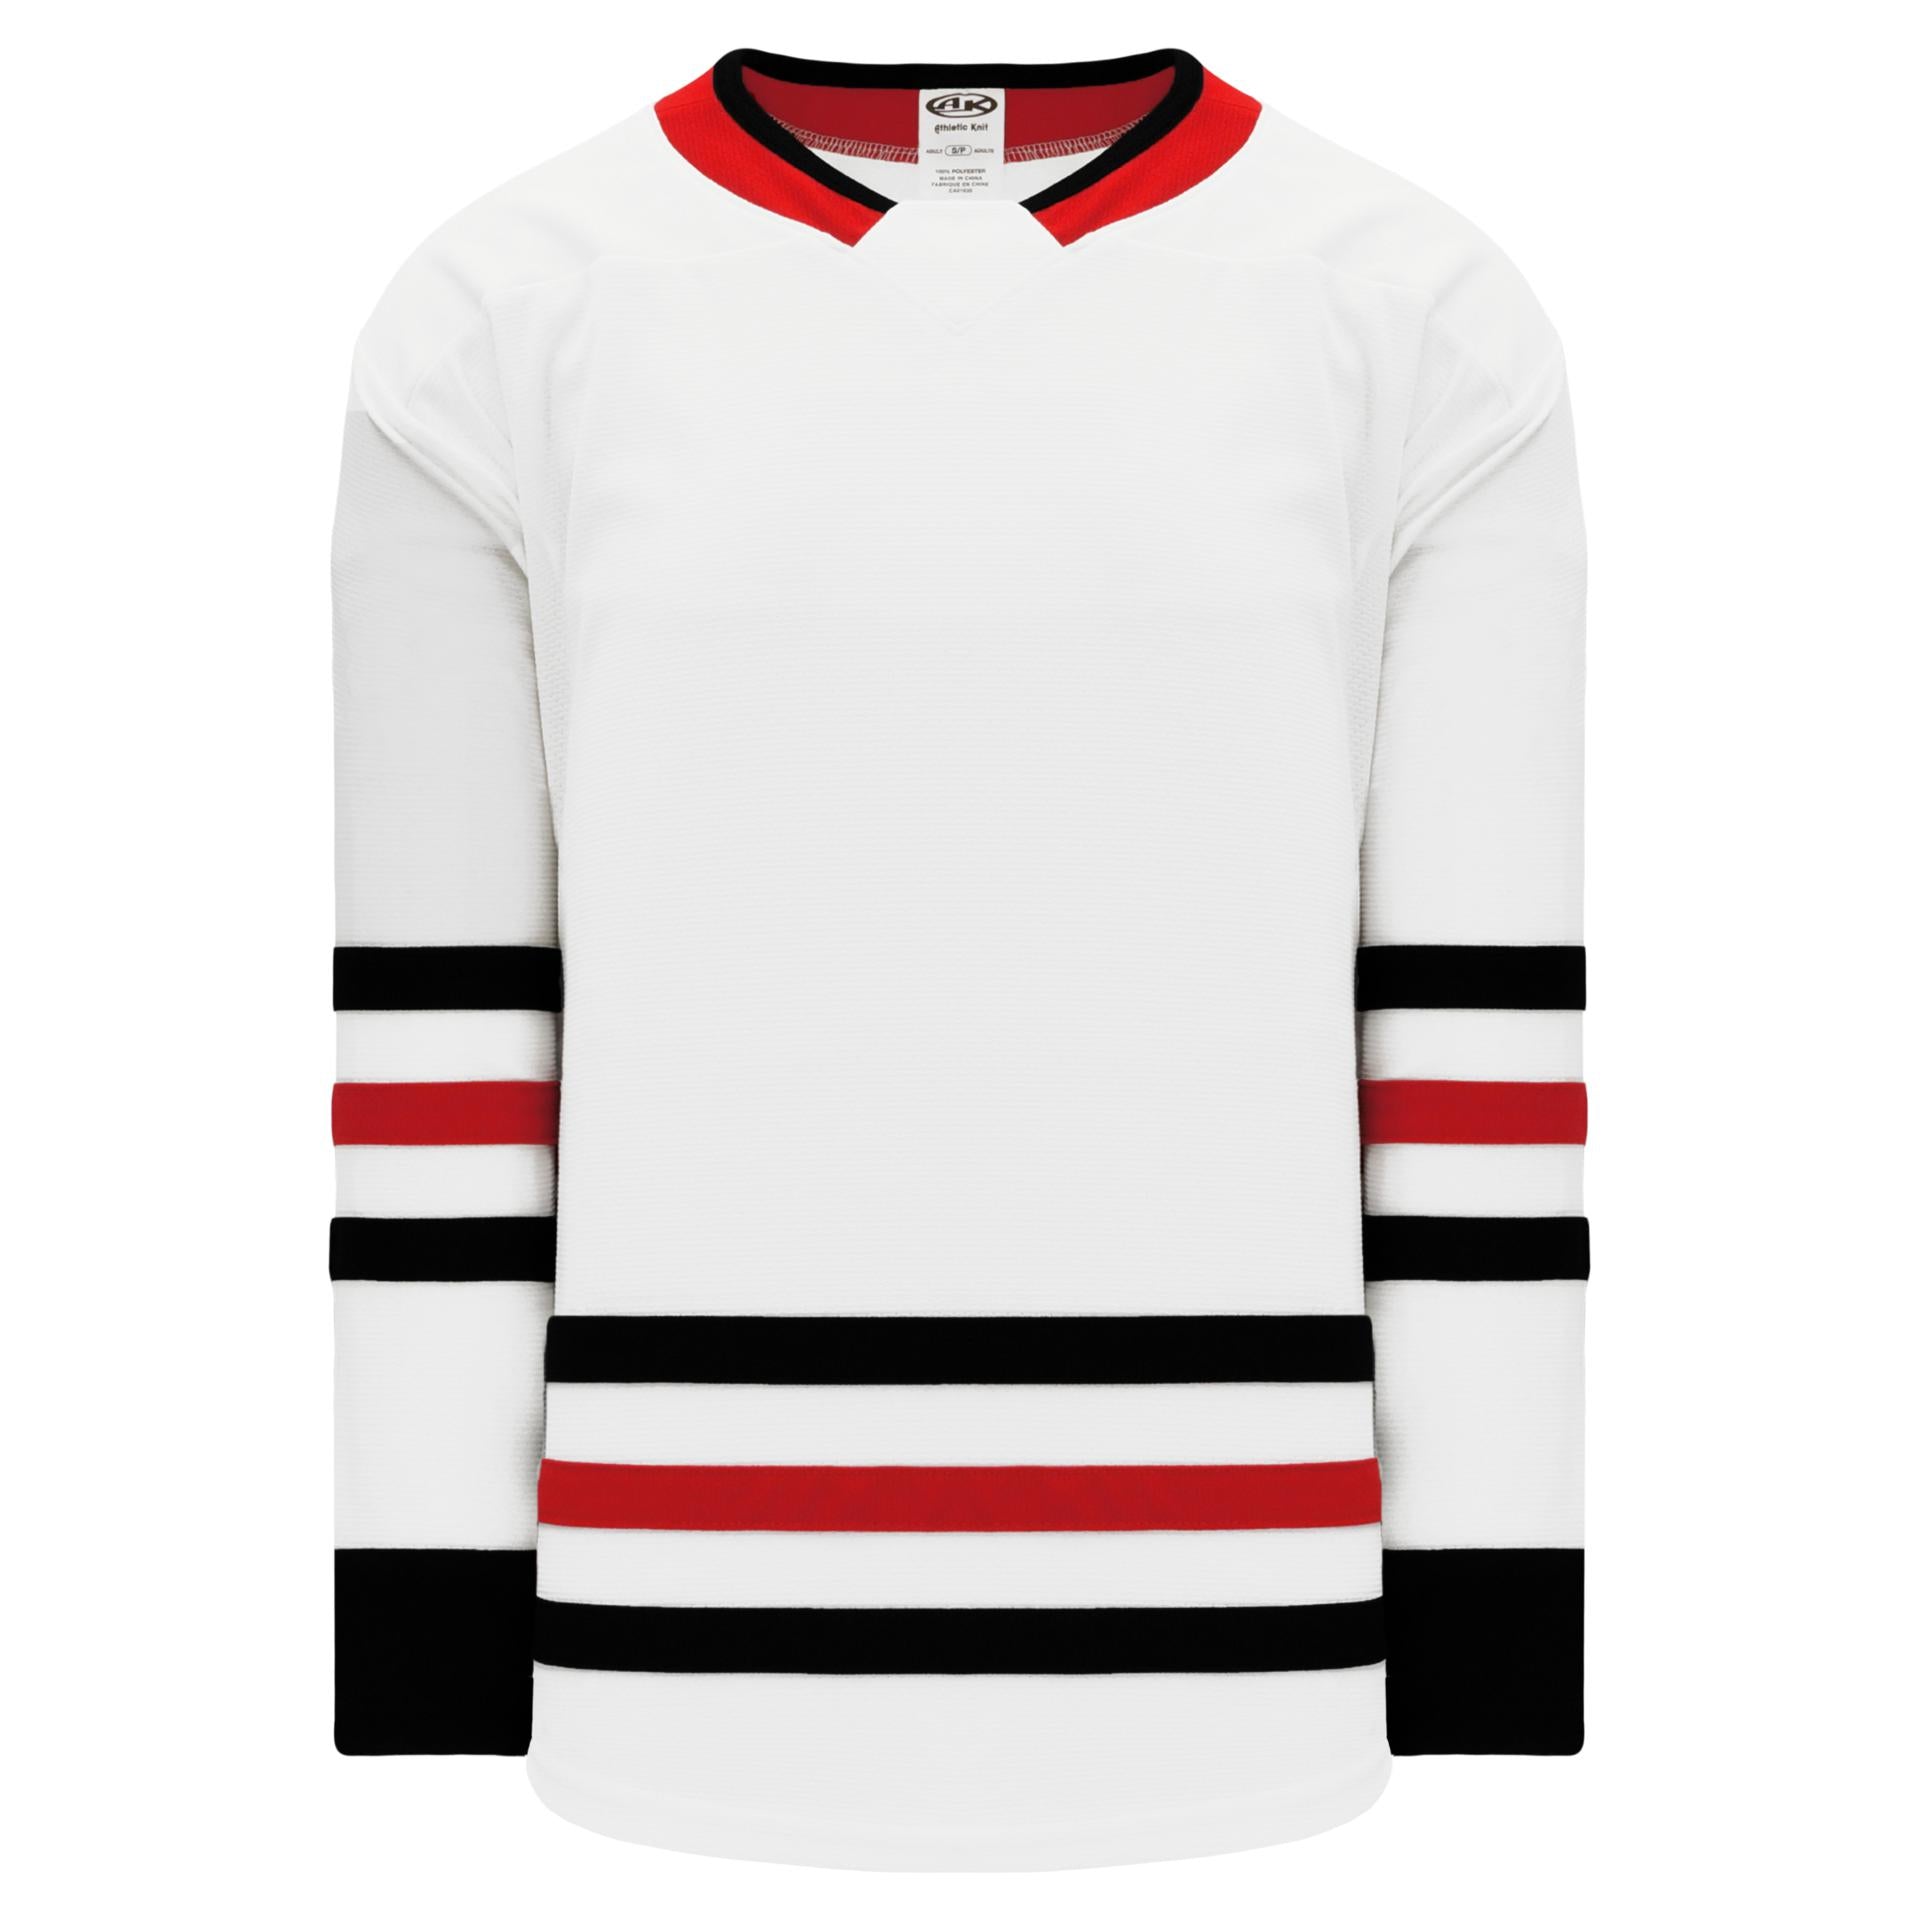 Chicago Blackhawks T-shirt CHI Hockey Shirt 